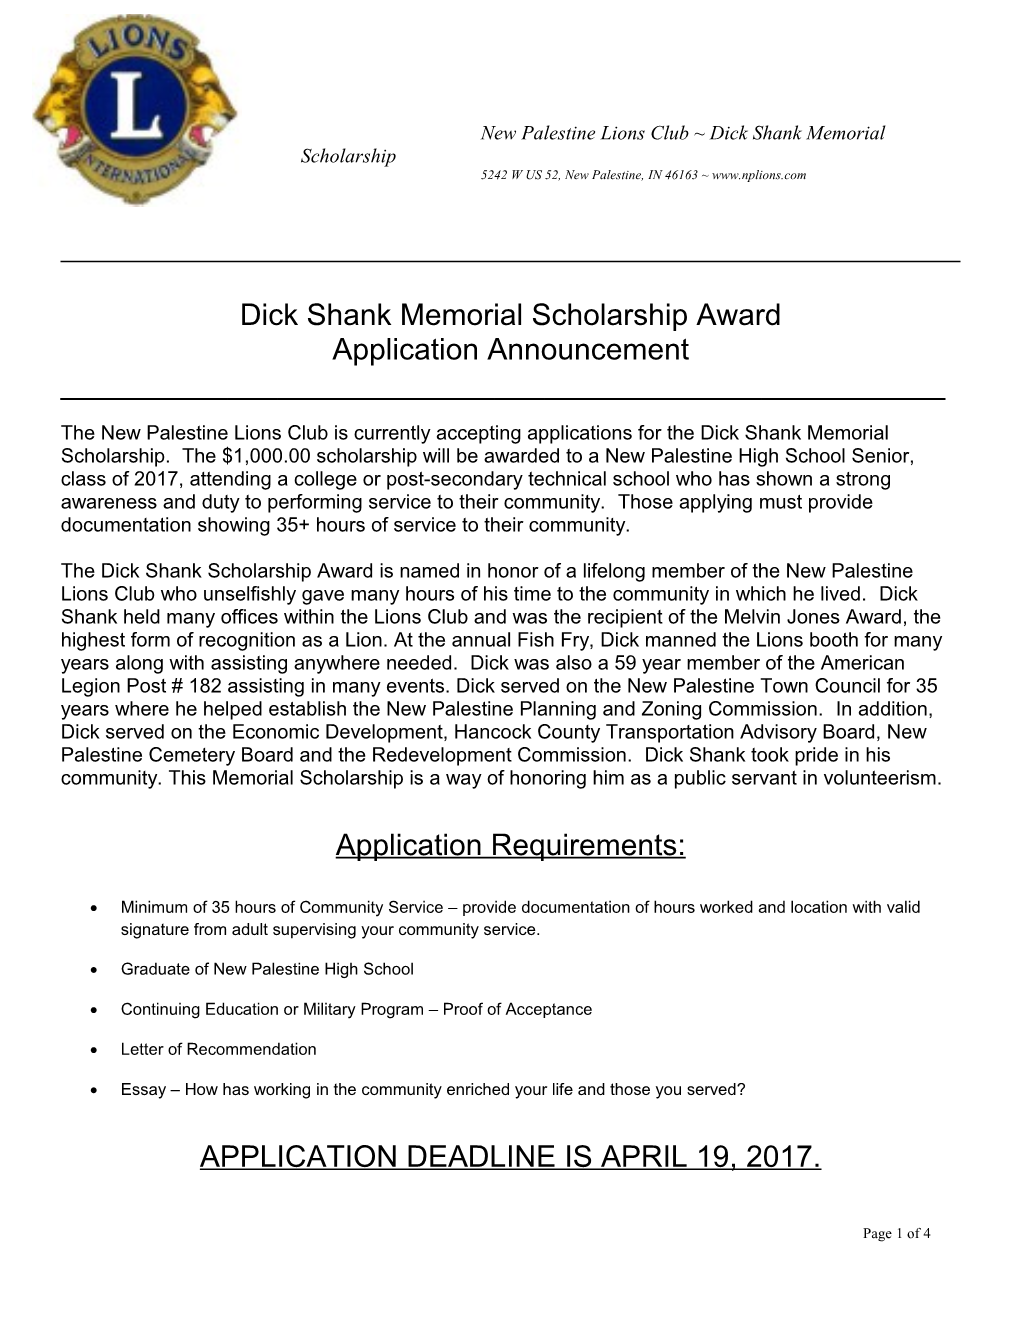 Grant Application Announcement